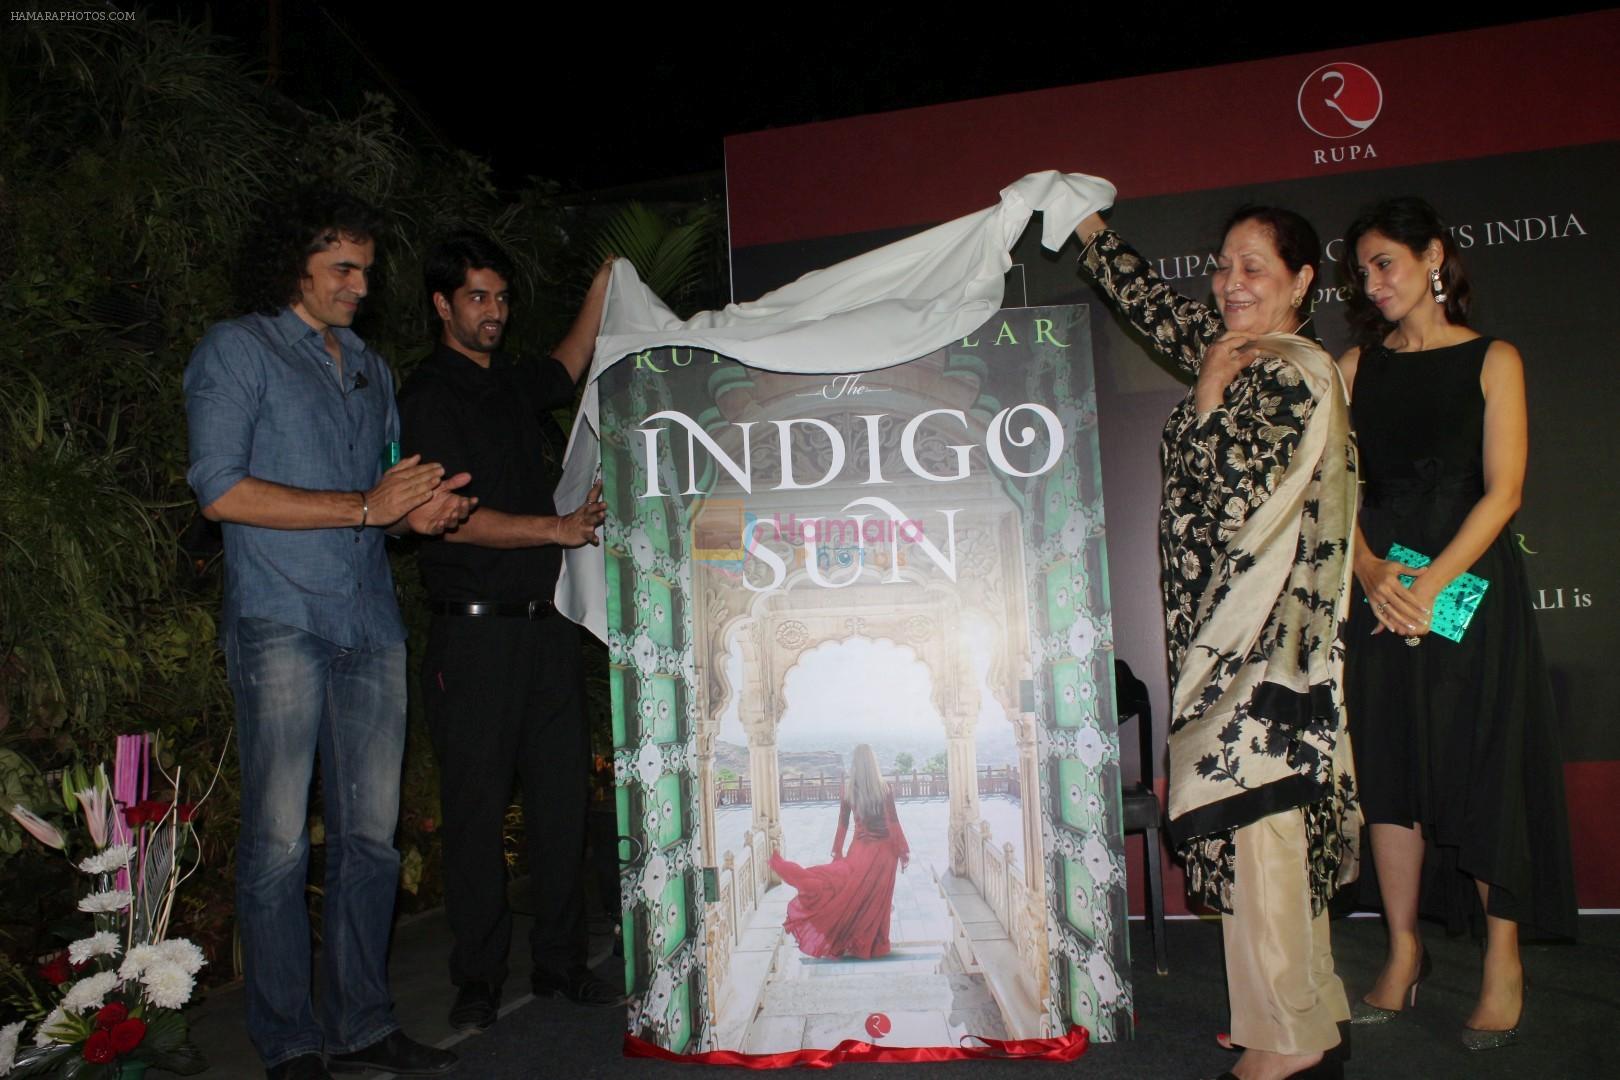 Imtiaz Ali Launch Of Debut Author Rupa Bhullar's Book The Indigo Sun on 7th Dec 2017